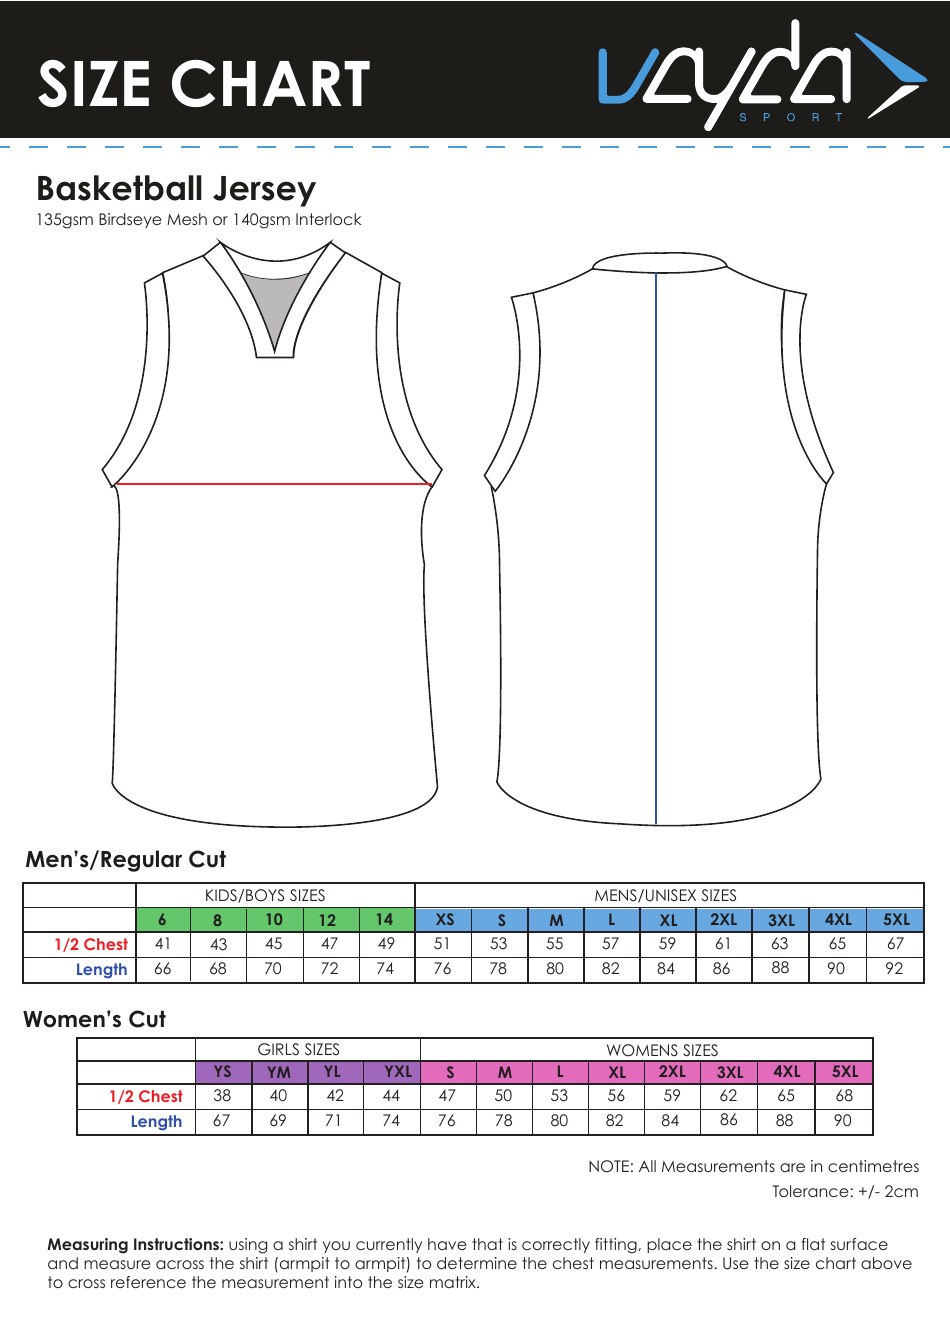 Basketball Jersey Size Chart - Vayda Sport Download Printable PDF ...